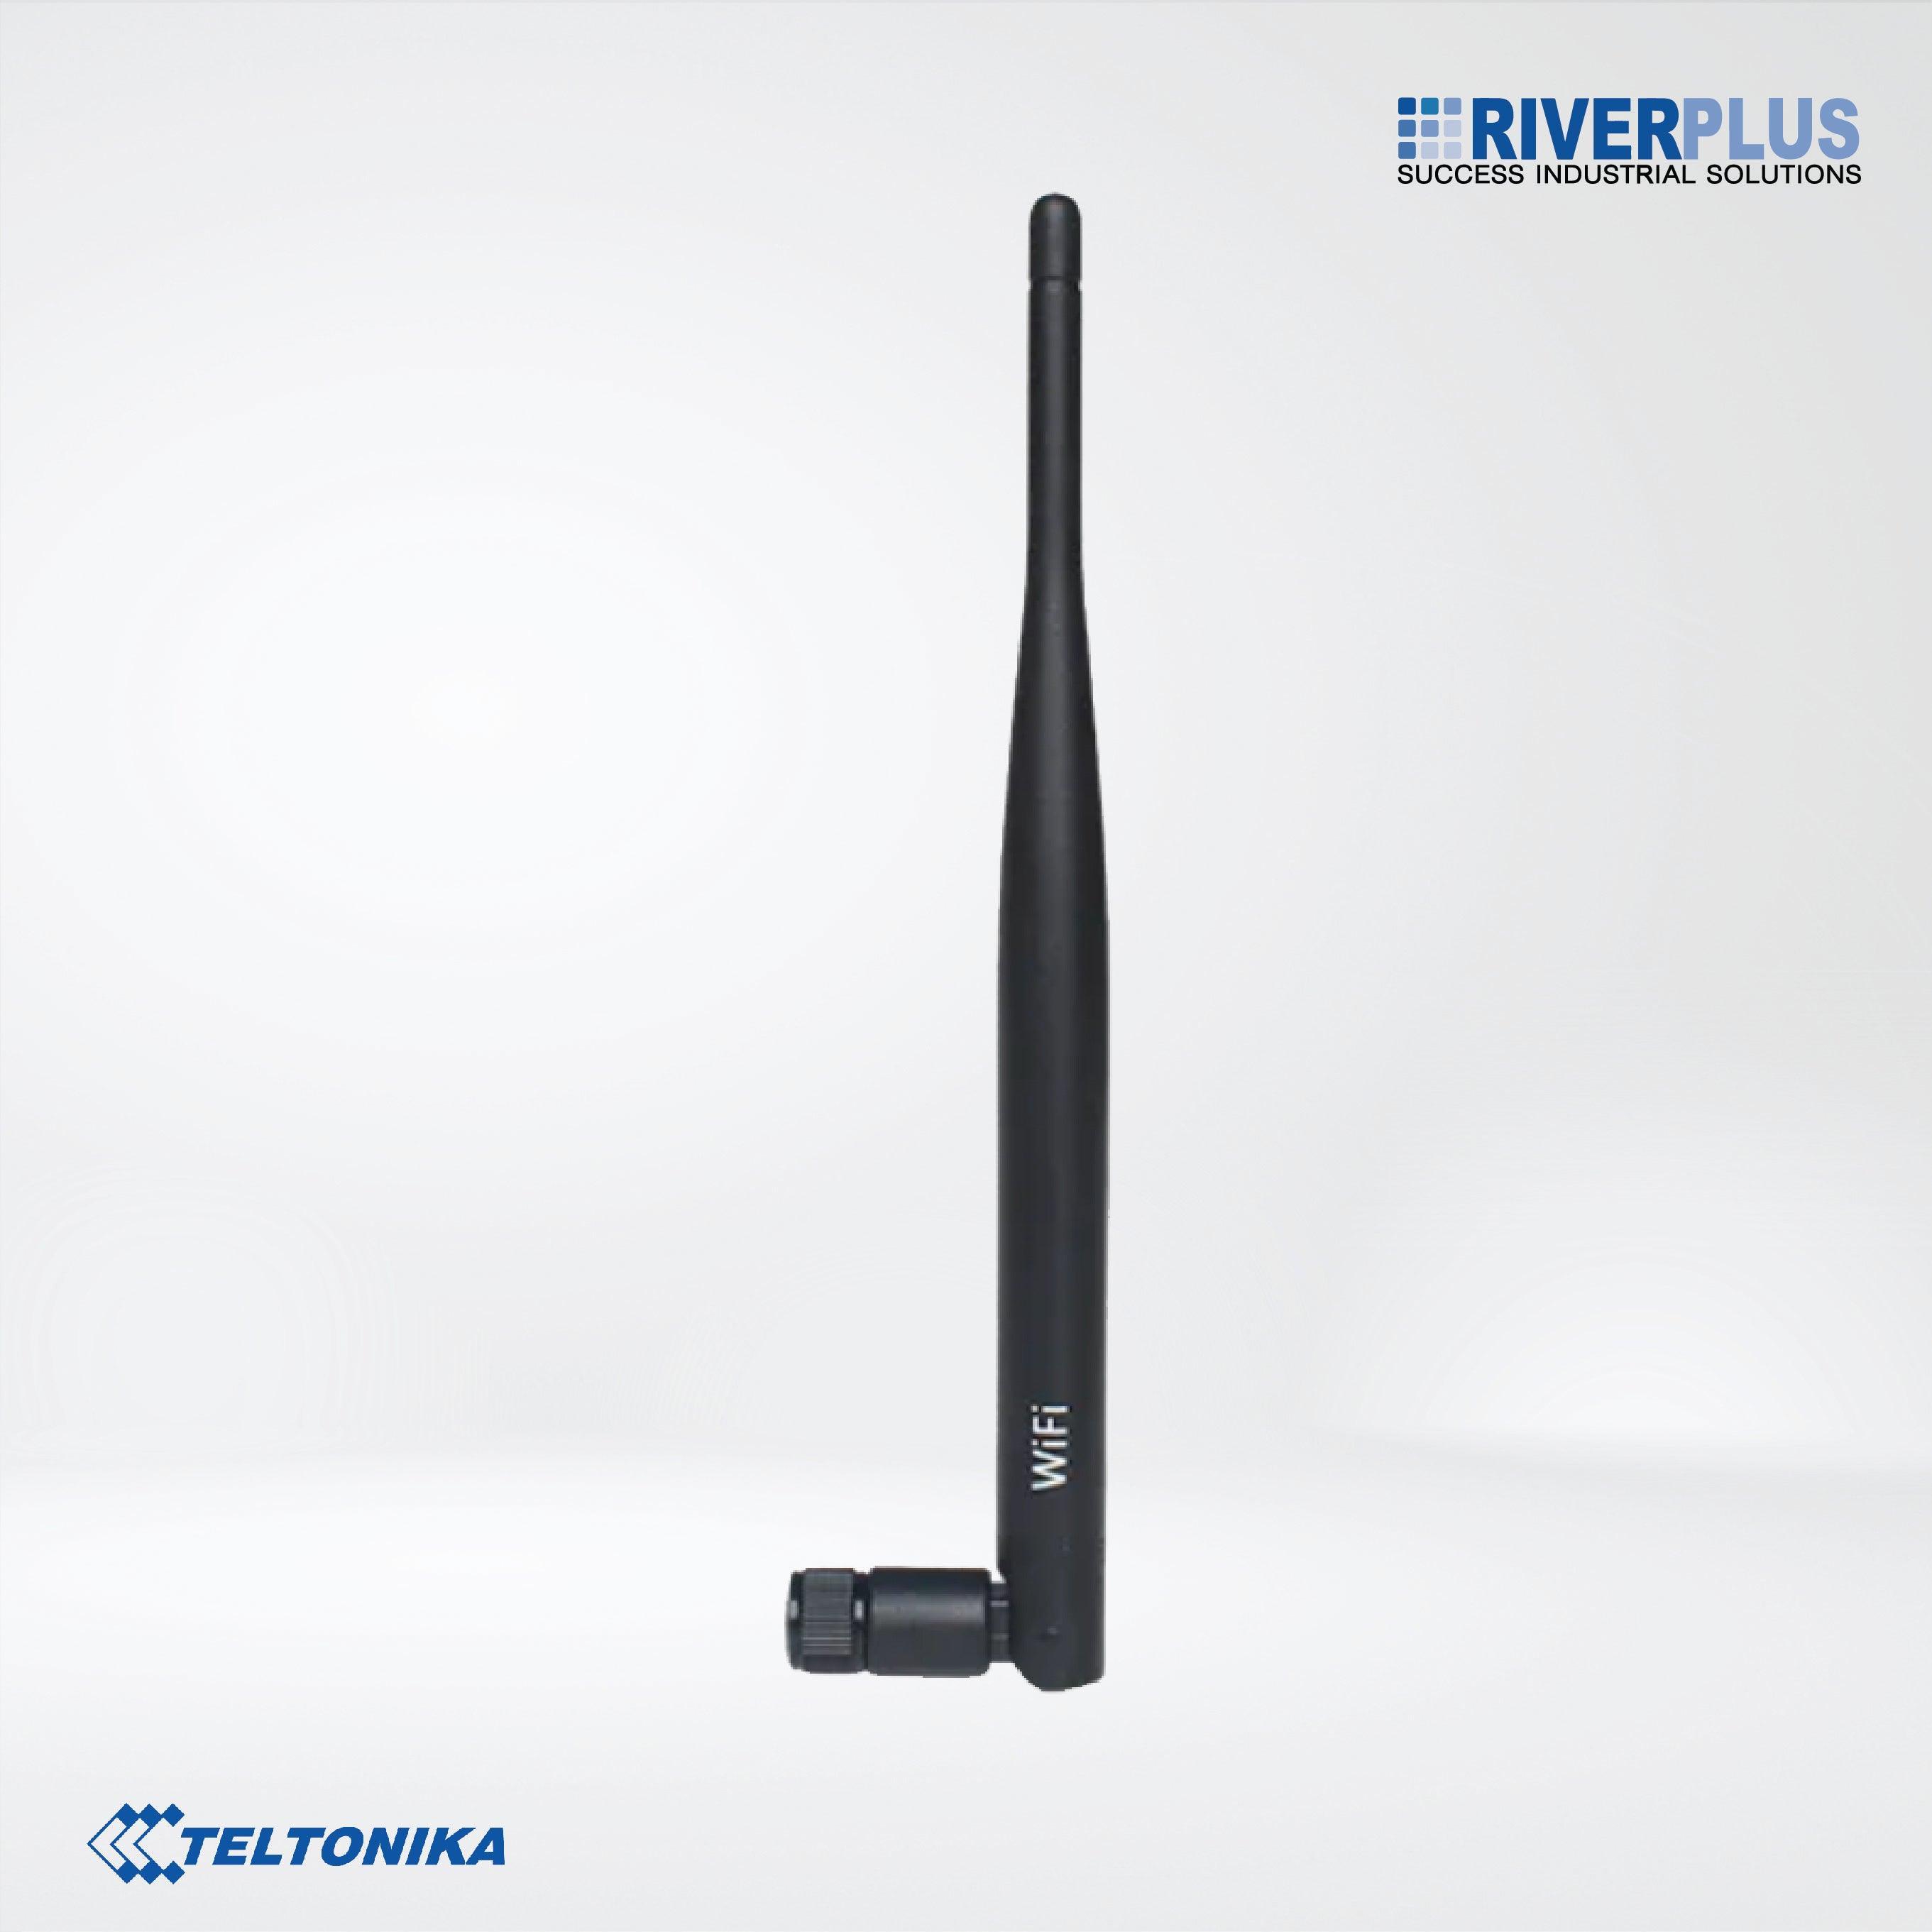 PR1URF51 WIFI SMA Antenna - Riverplus